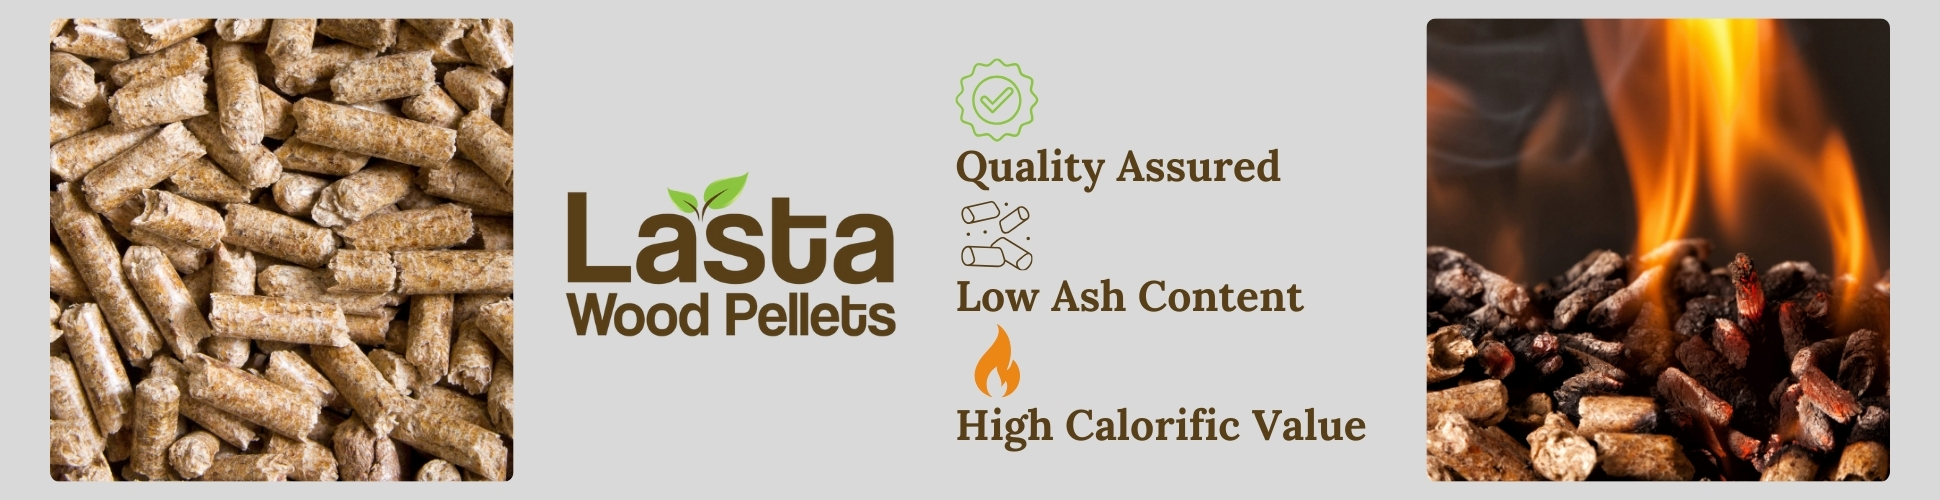 The benefits of Lasta Wood Pellets - A Doherty Wood Shavings brand